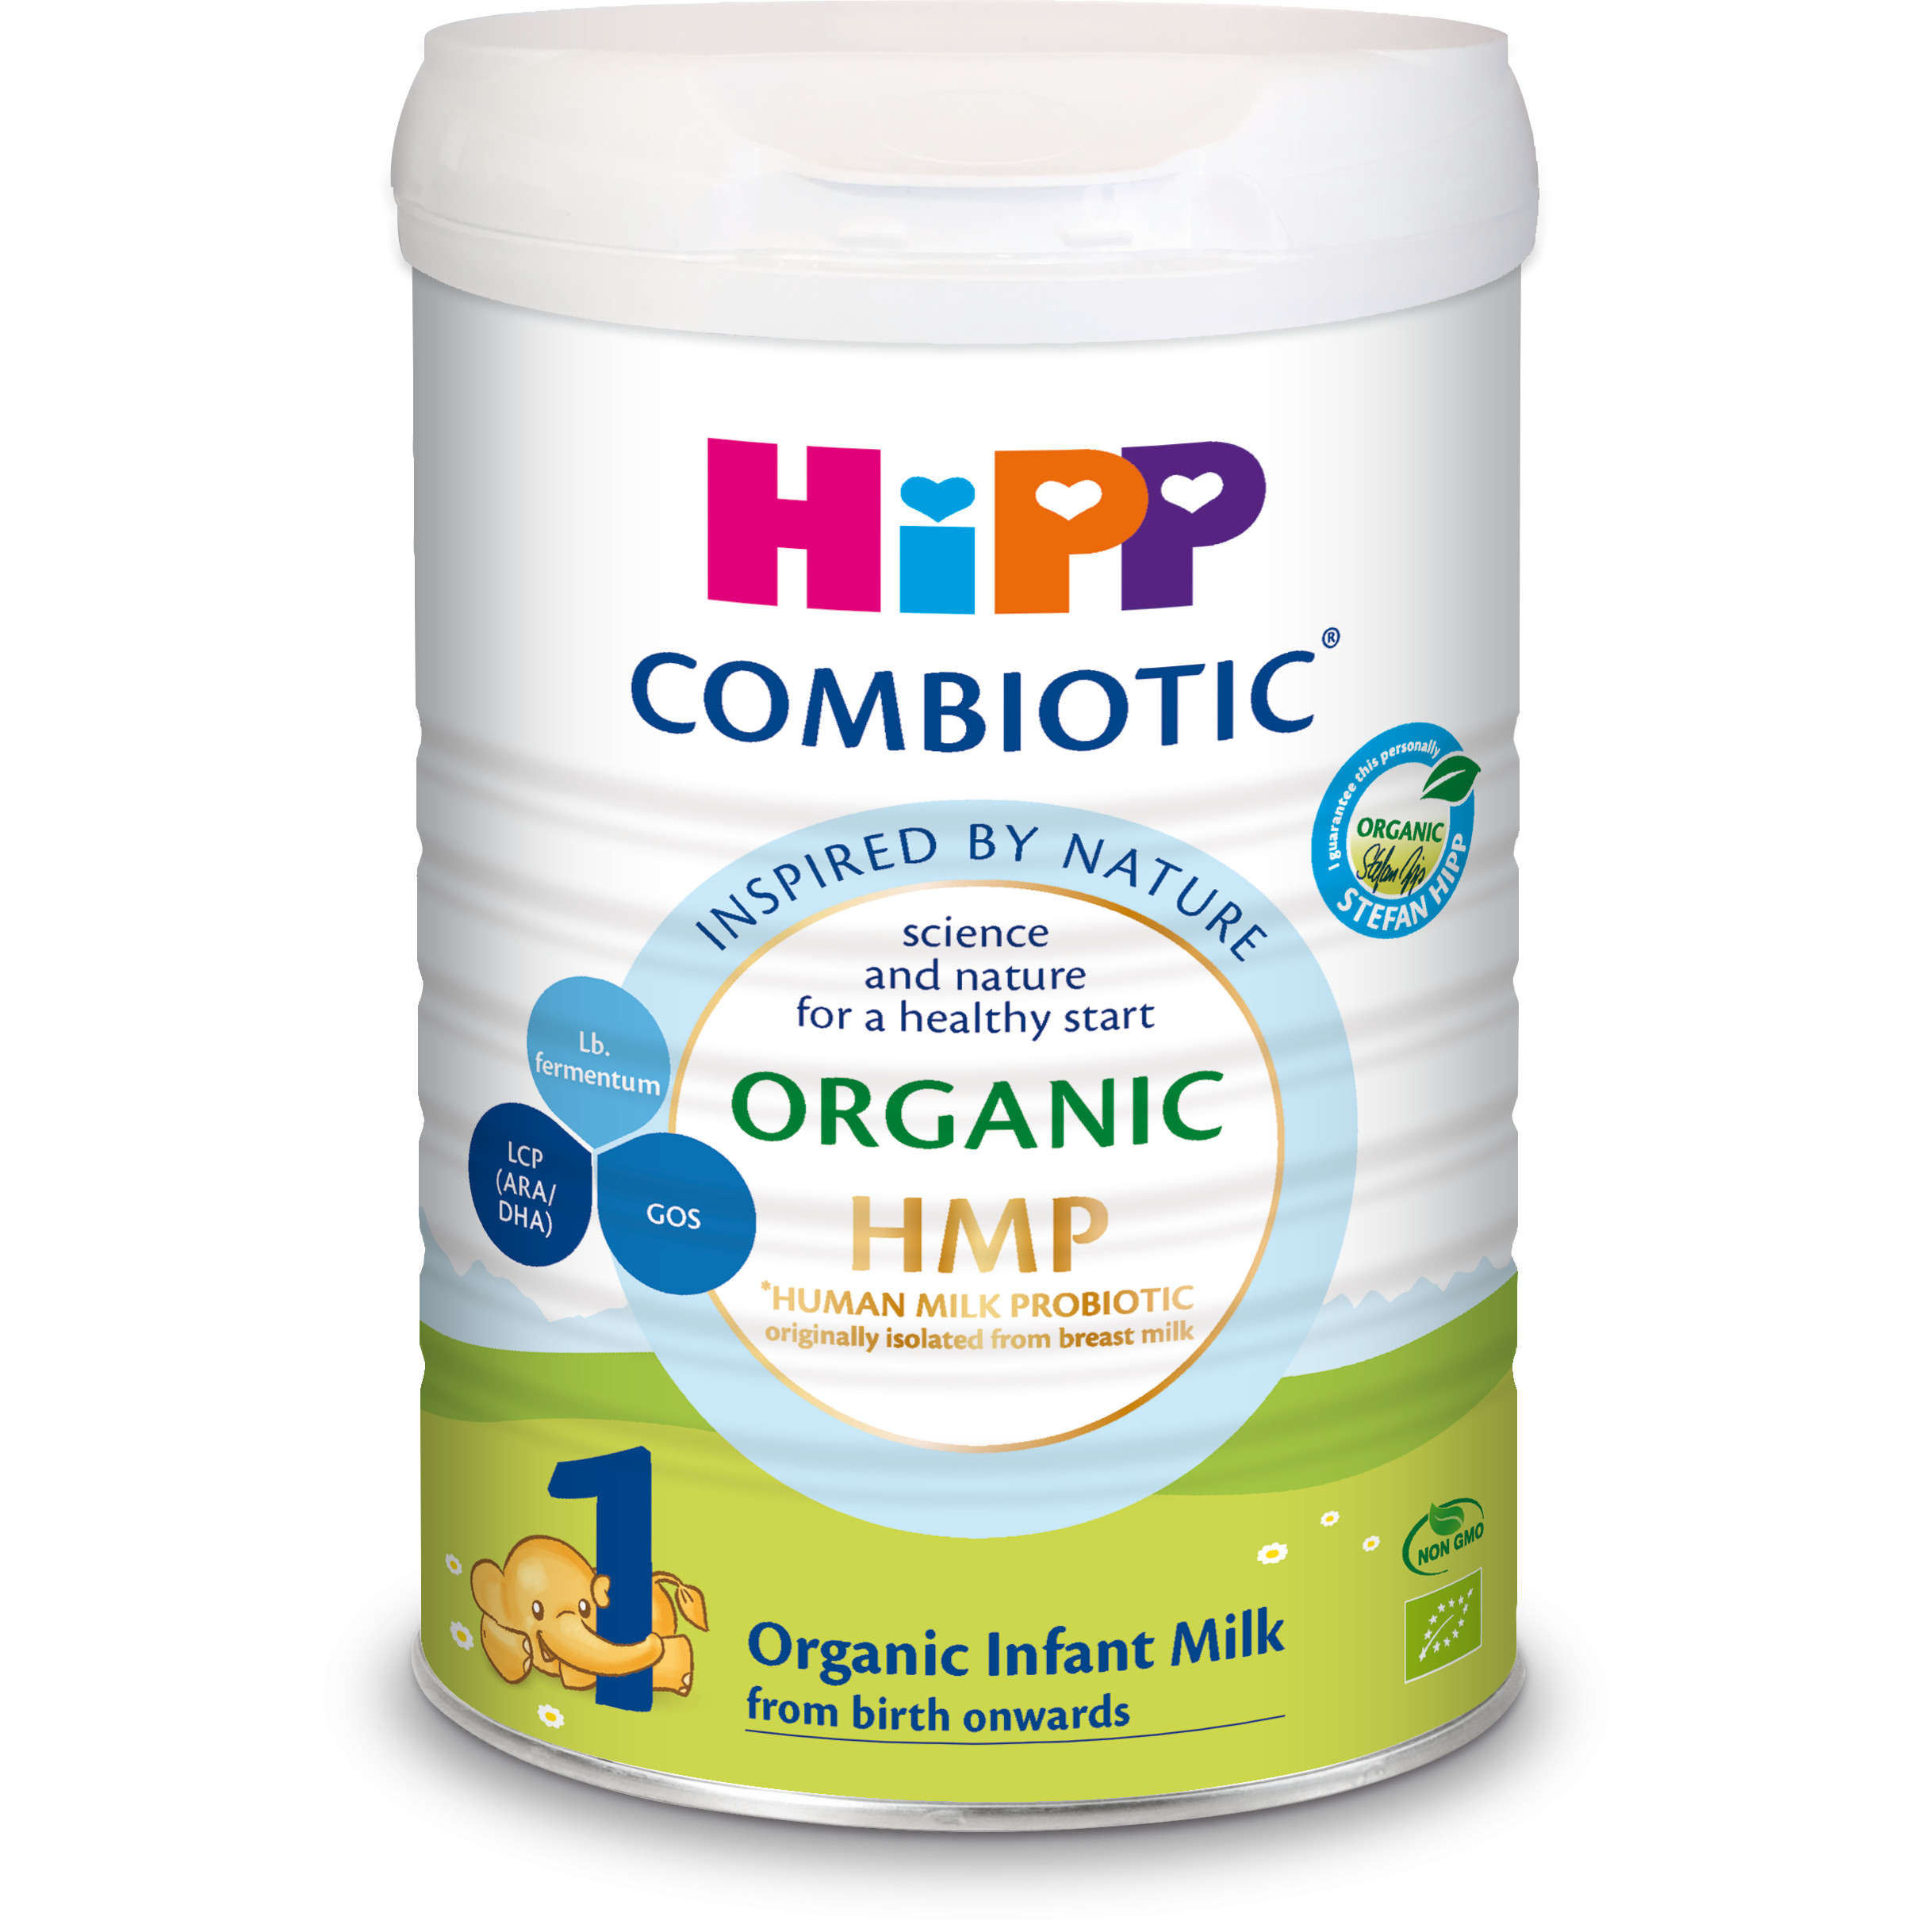 Sữa Hipp Organic combiotic HMP hữu cơ số 1 800g mẫu mới